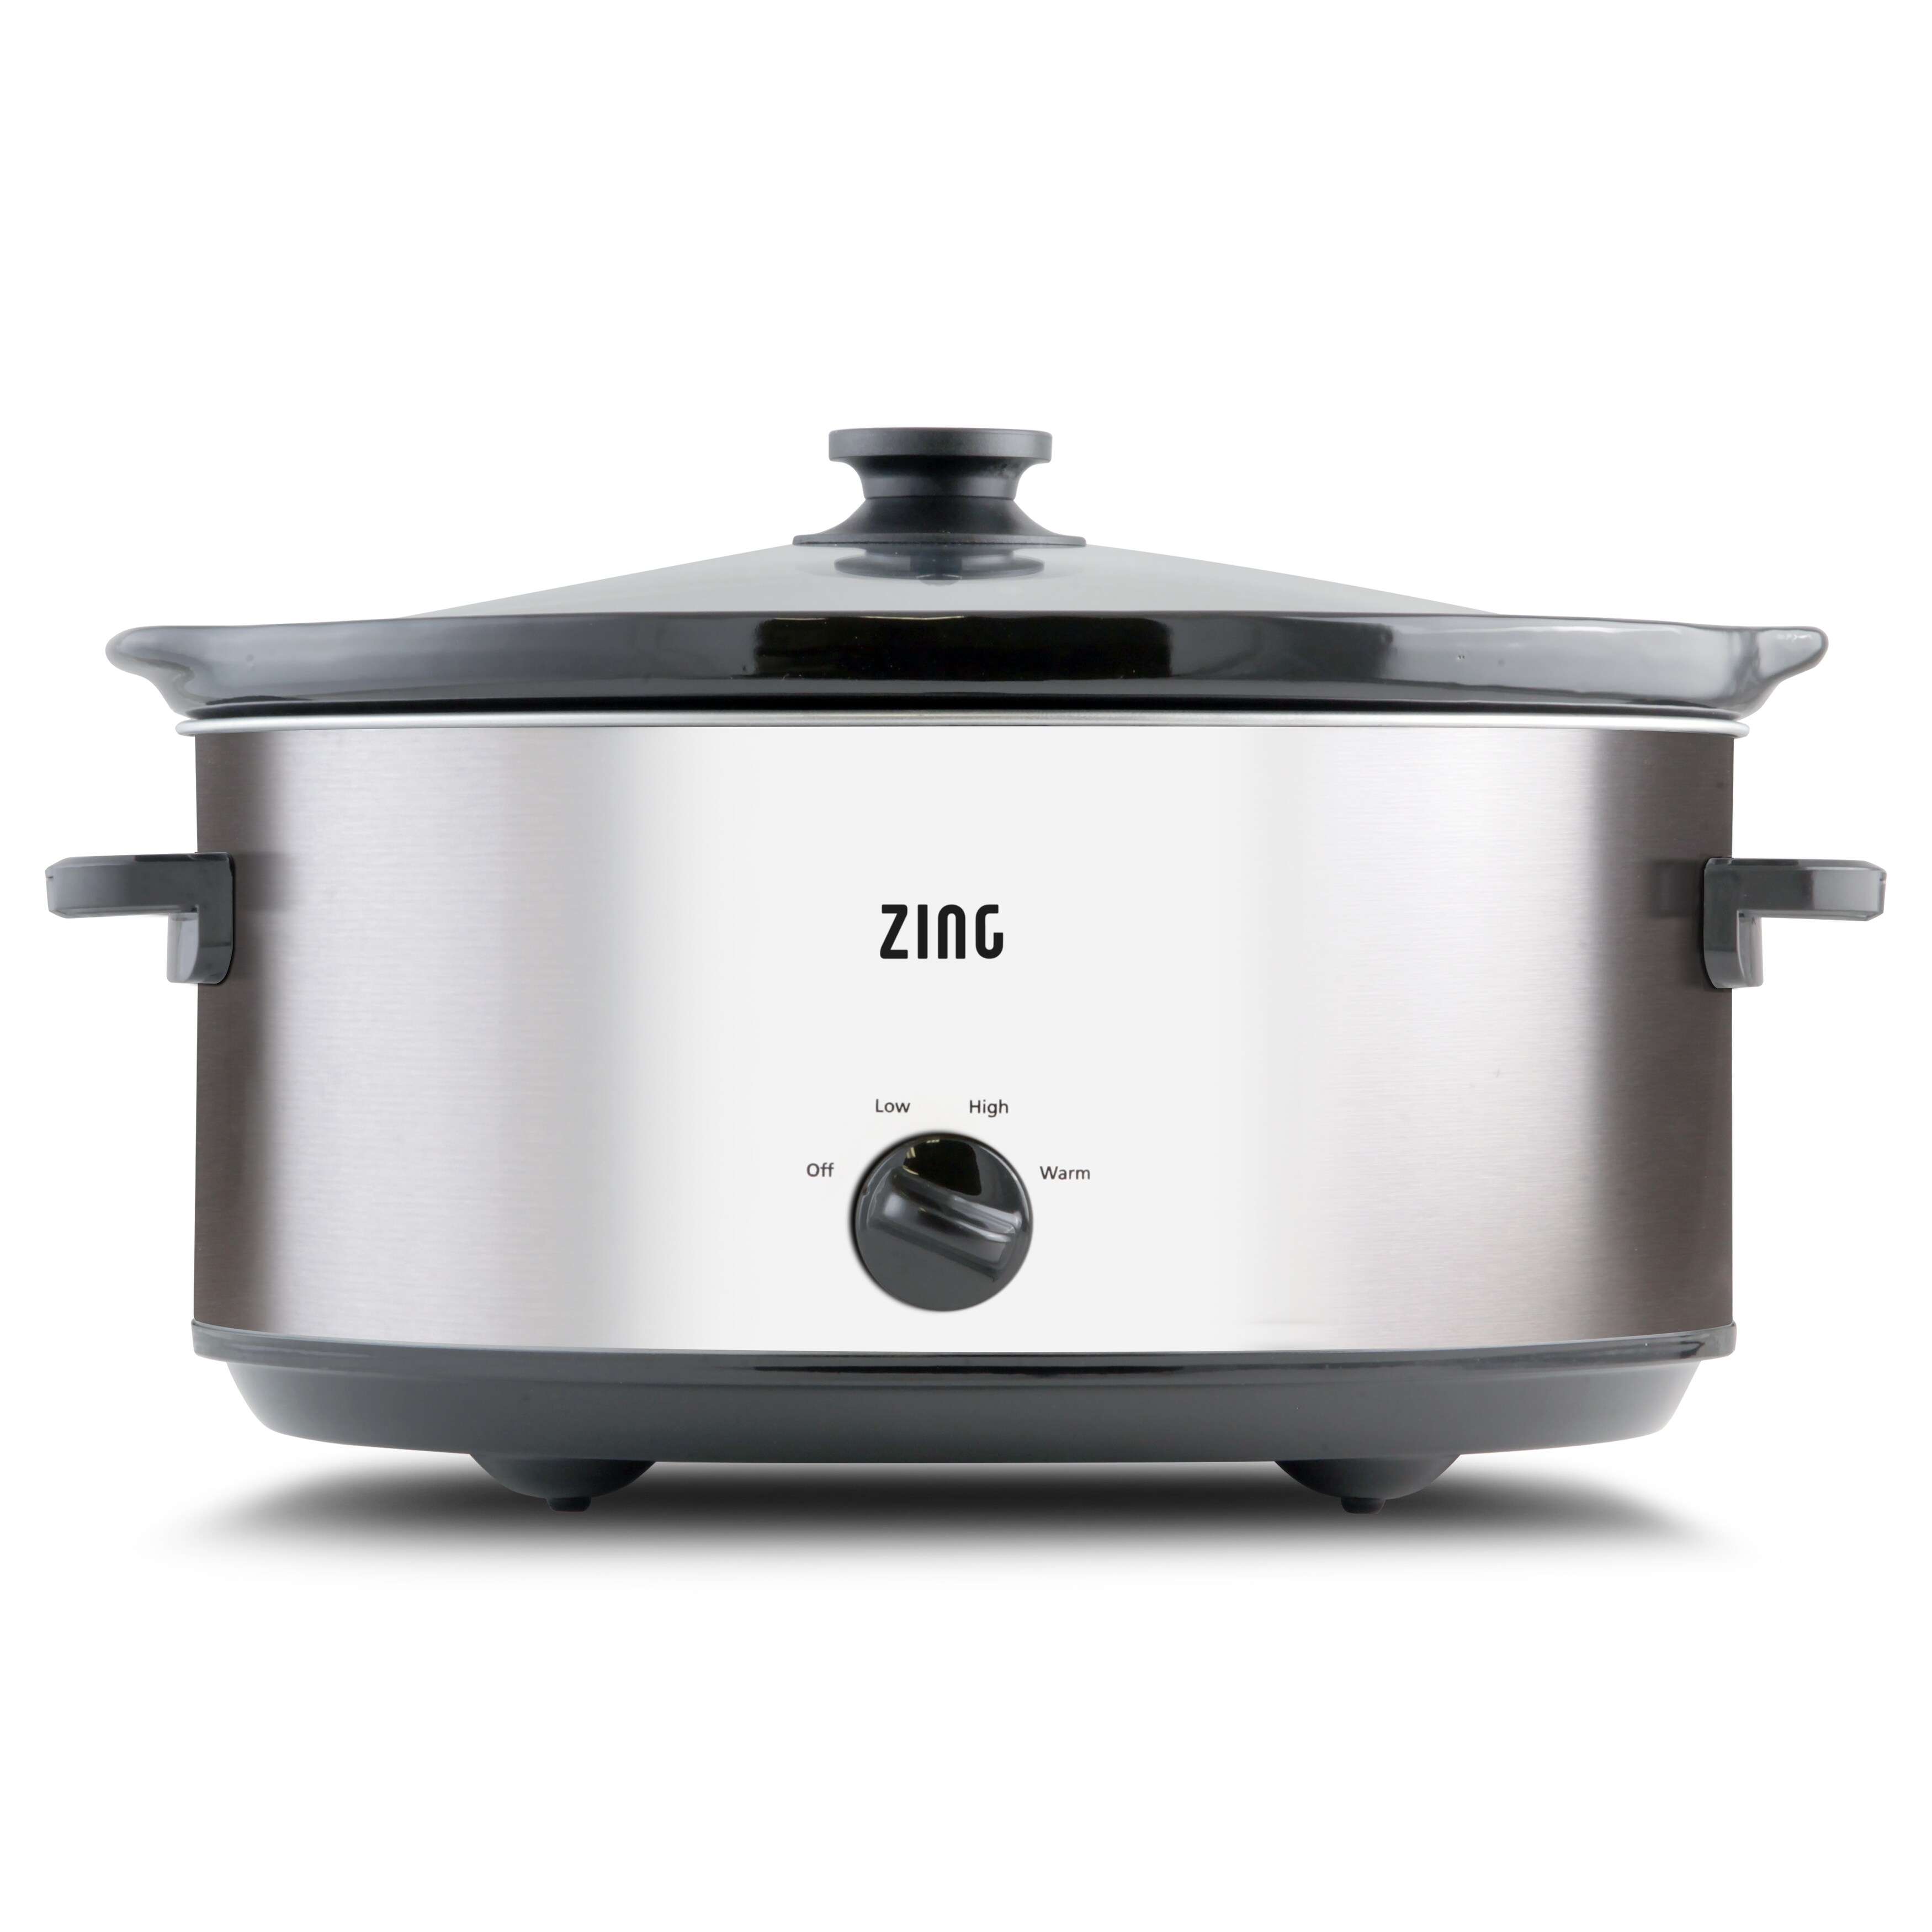 Zing 7 Qt Oval Dark Stainless Steel Digital Slow Cooker - Bed Bath & Beyond  - 32651136